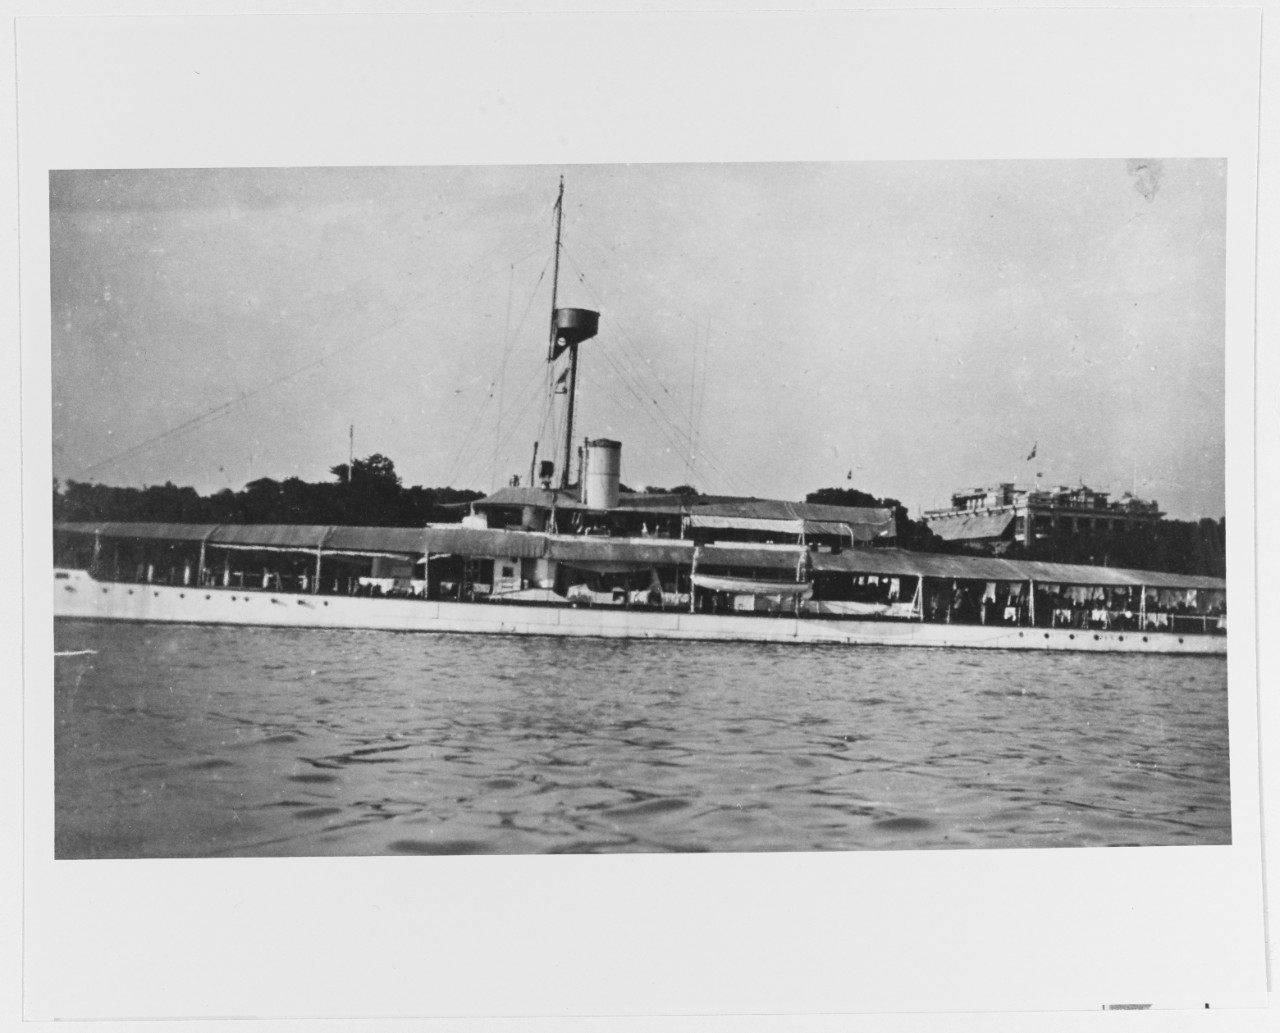 TARANTULA (British river gunboat, 1915)